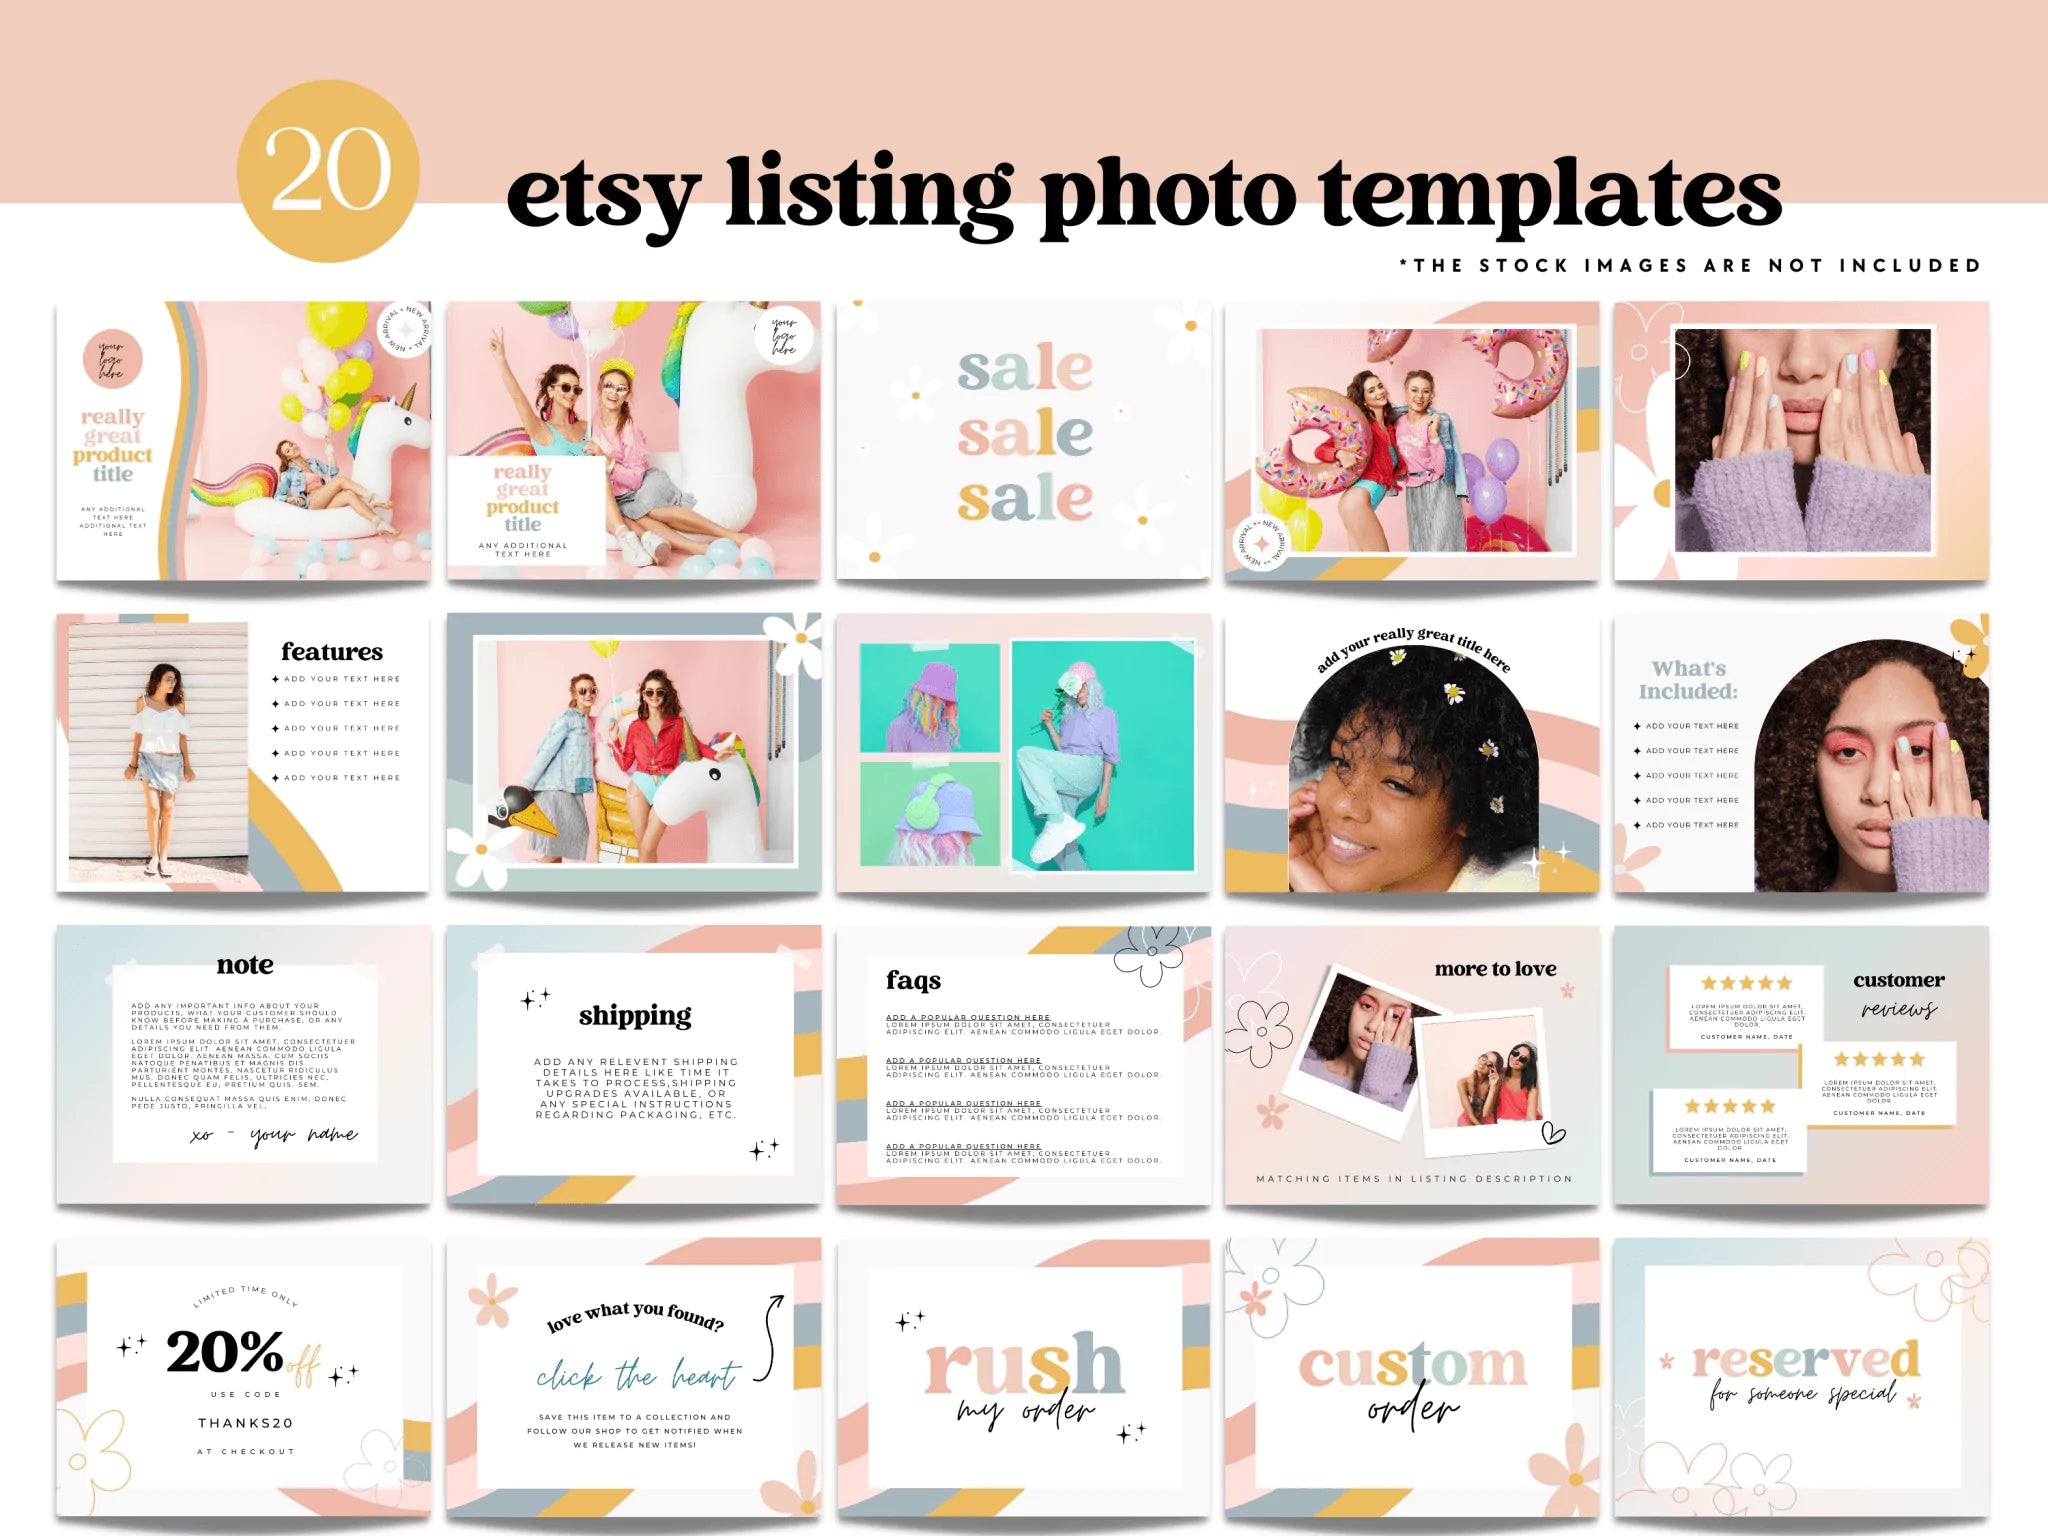 Retro Etsy Shop Branding Kit Canva Template | Etsy Banner, Listing Photos, Icon | Dani - Trendy Fox Studio